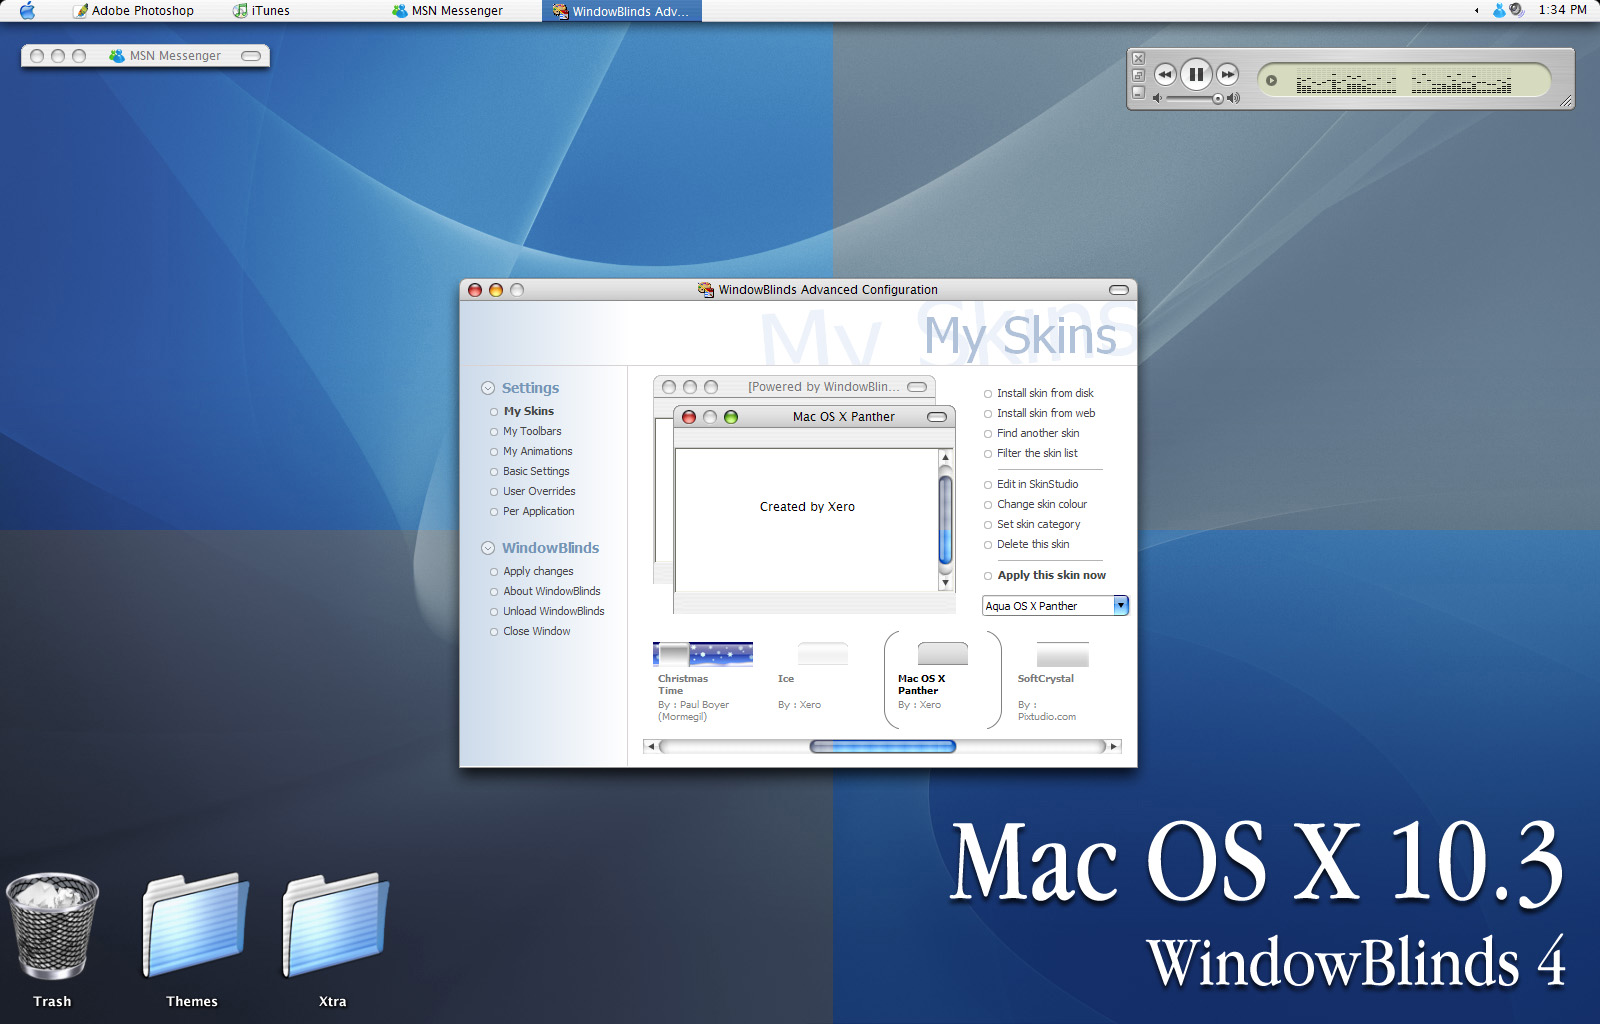 WINDOWBLINDS MAC OS X TIGER XP FREE DOWNLOAD